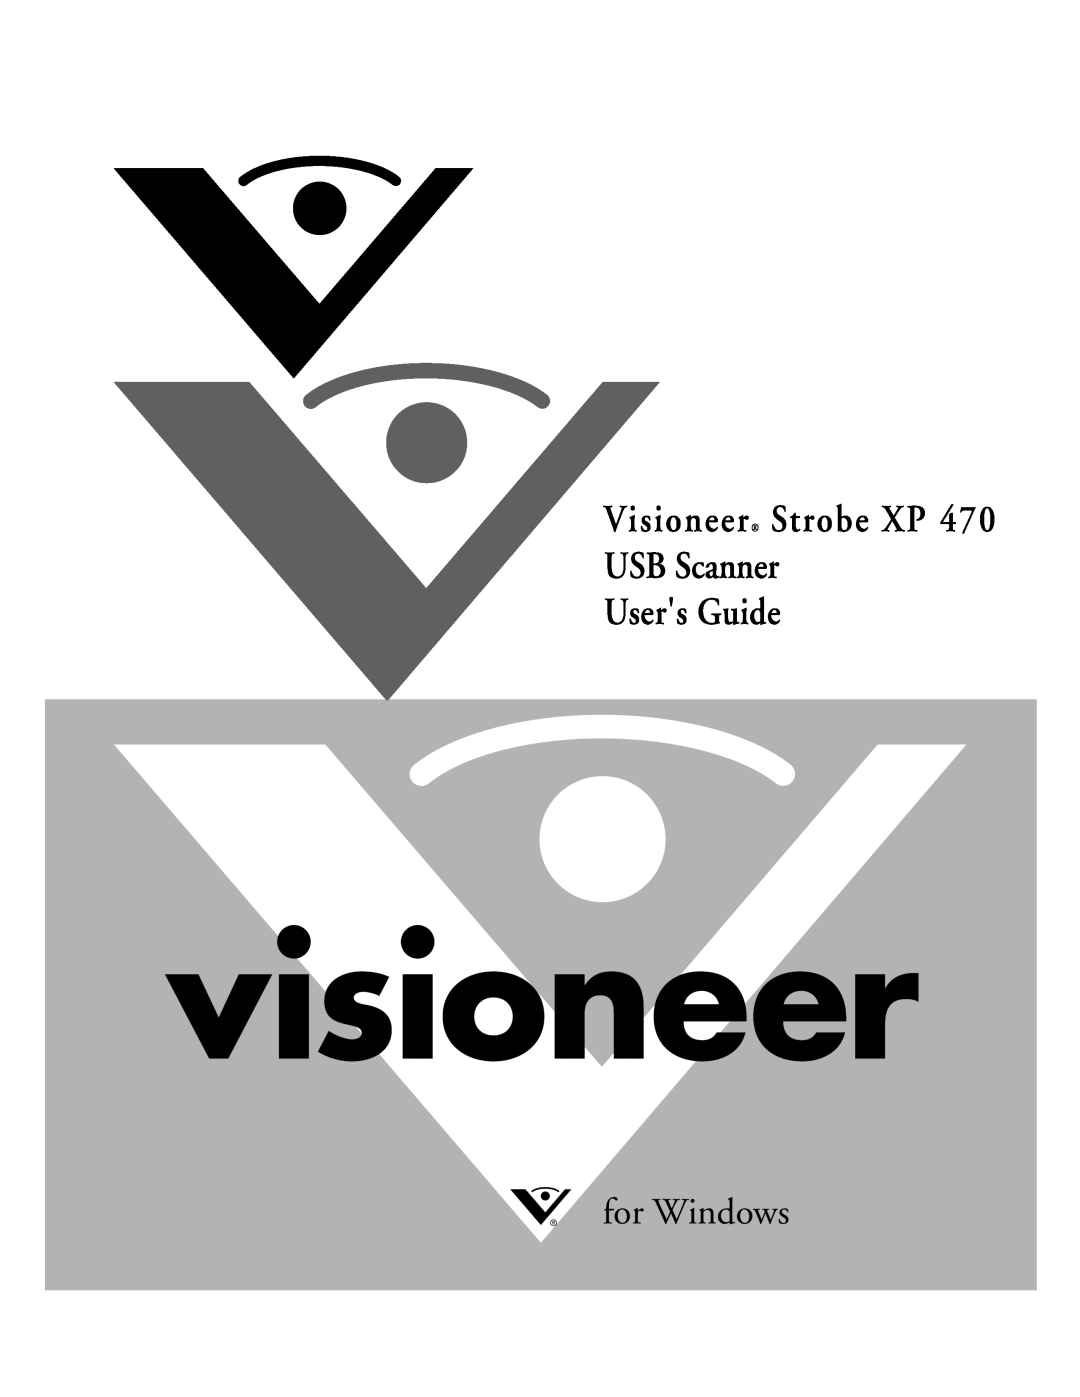 Visioneer XP 470 manual Visioneer Strobe XP USB Scanner Users Guide, for Windows 